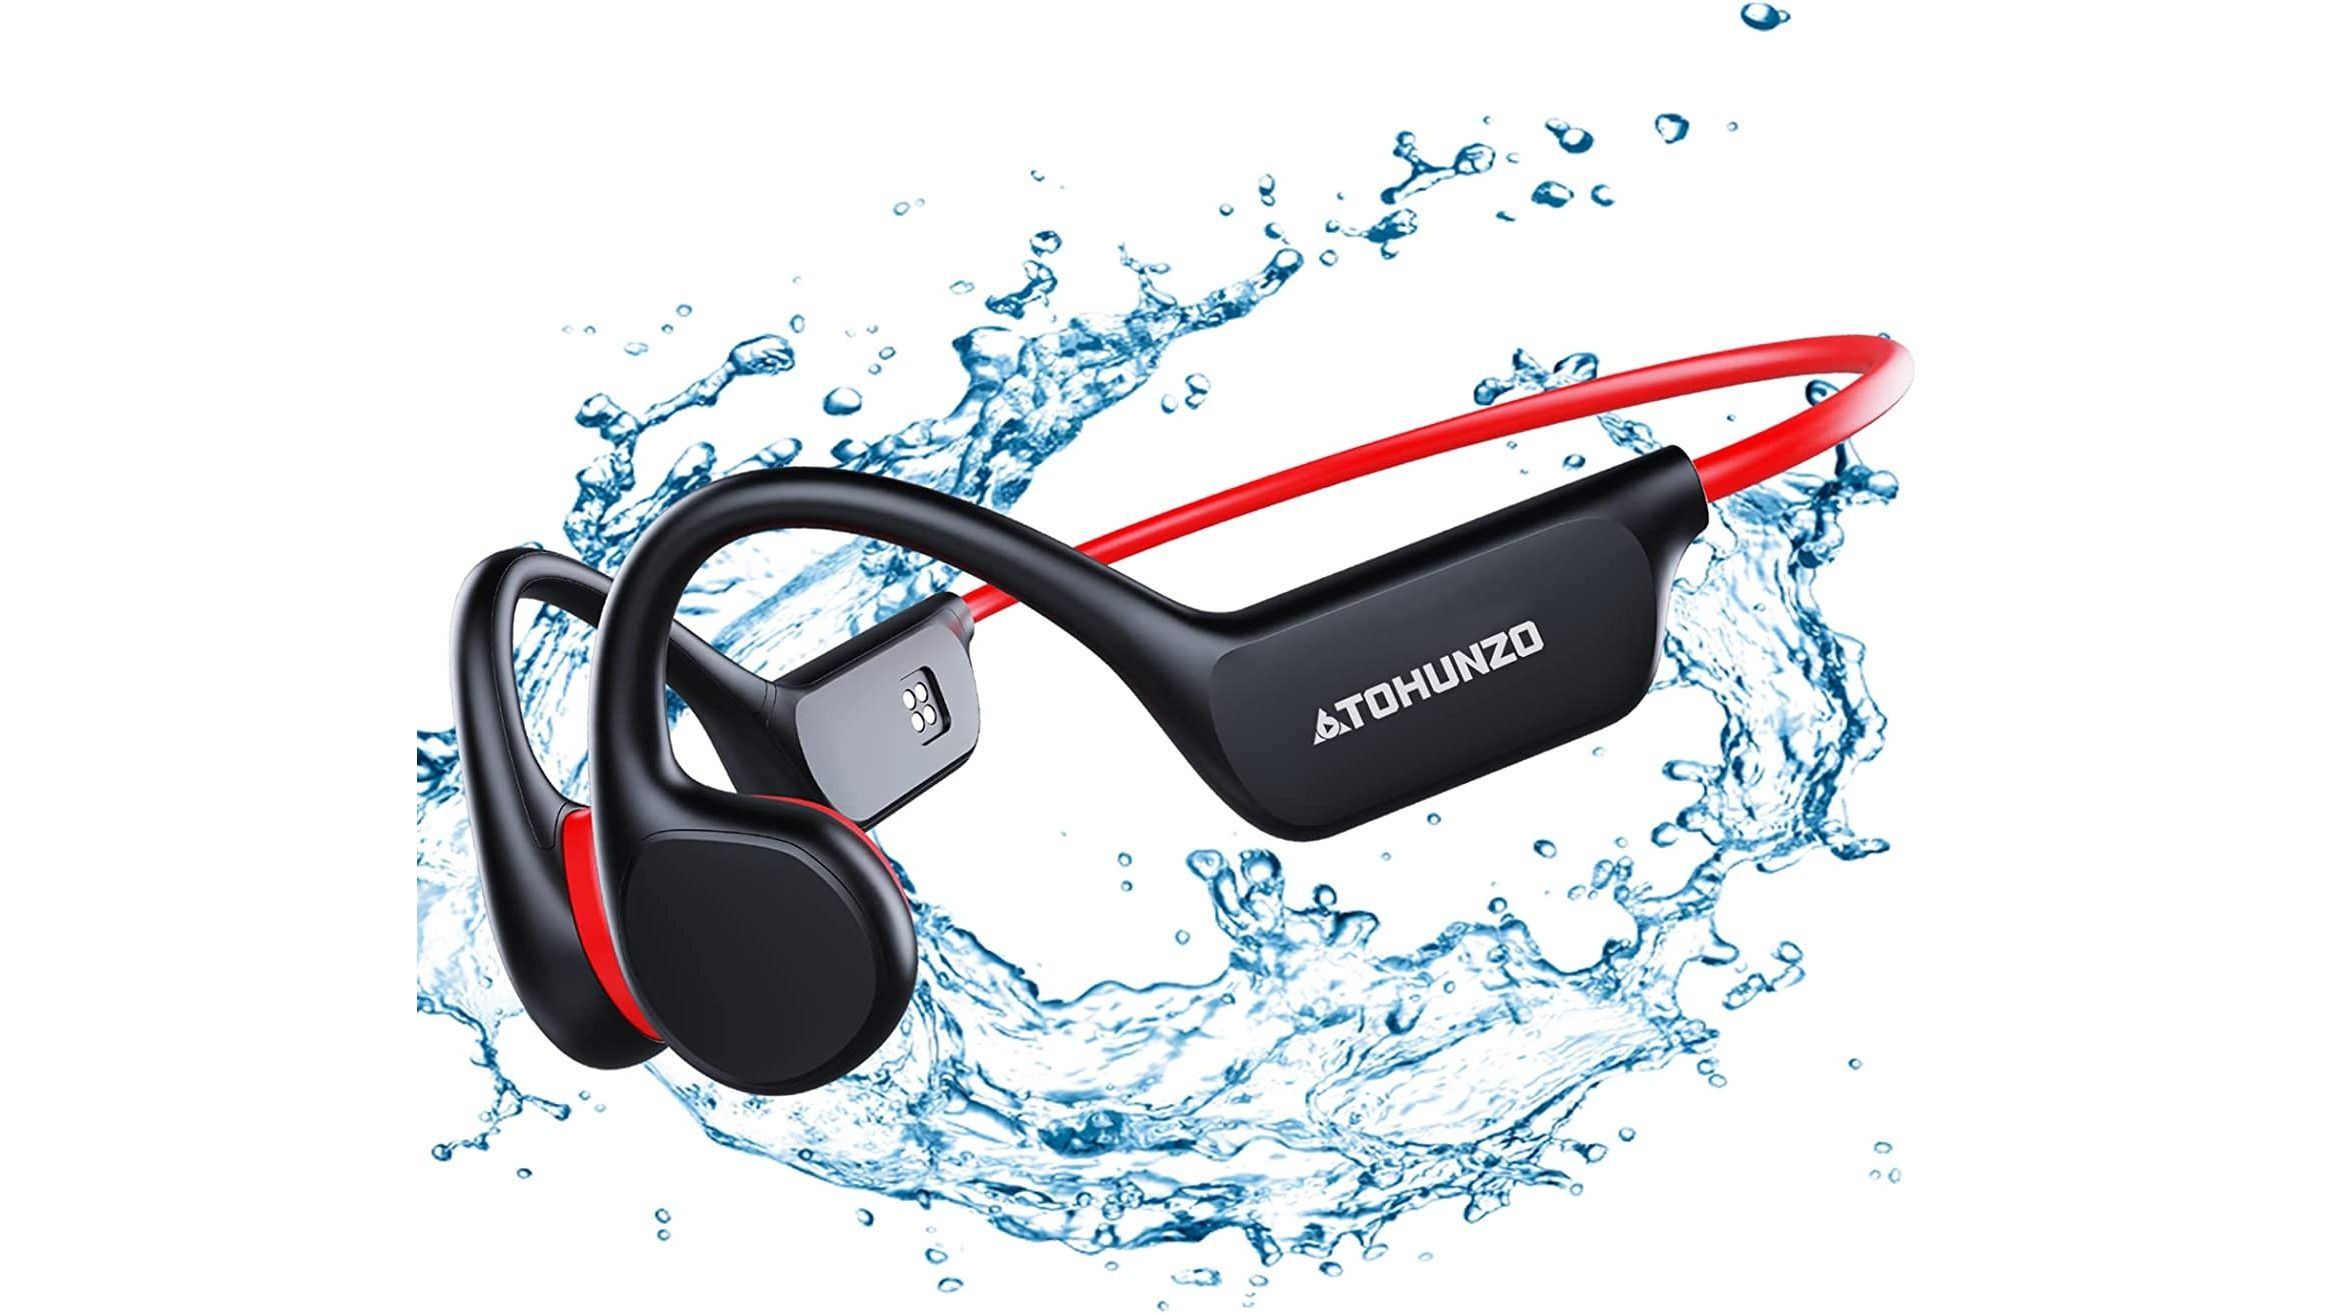 Tohunzo Waterproof Bone Conduction Headphones